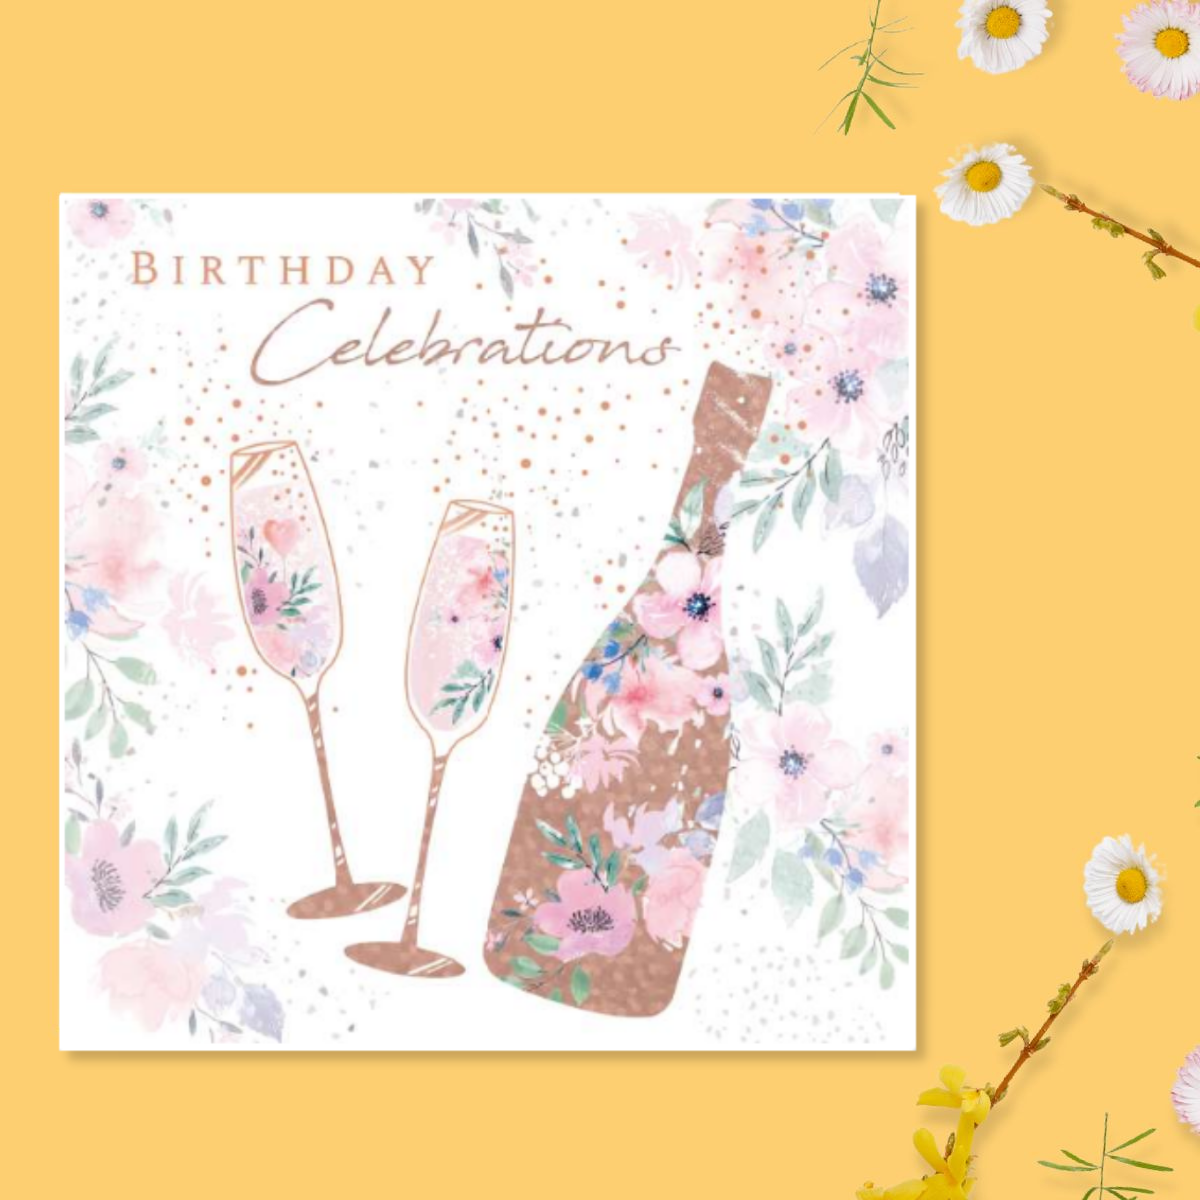 Blush Birthday Card - Celebrations